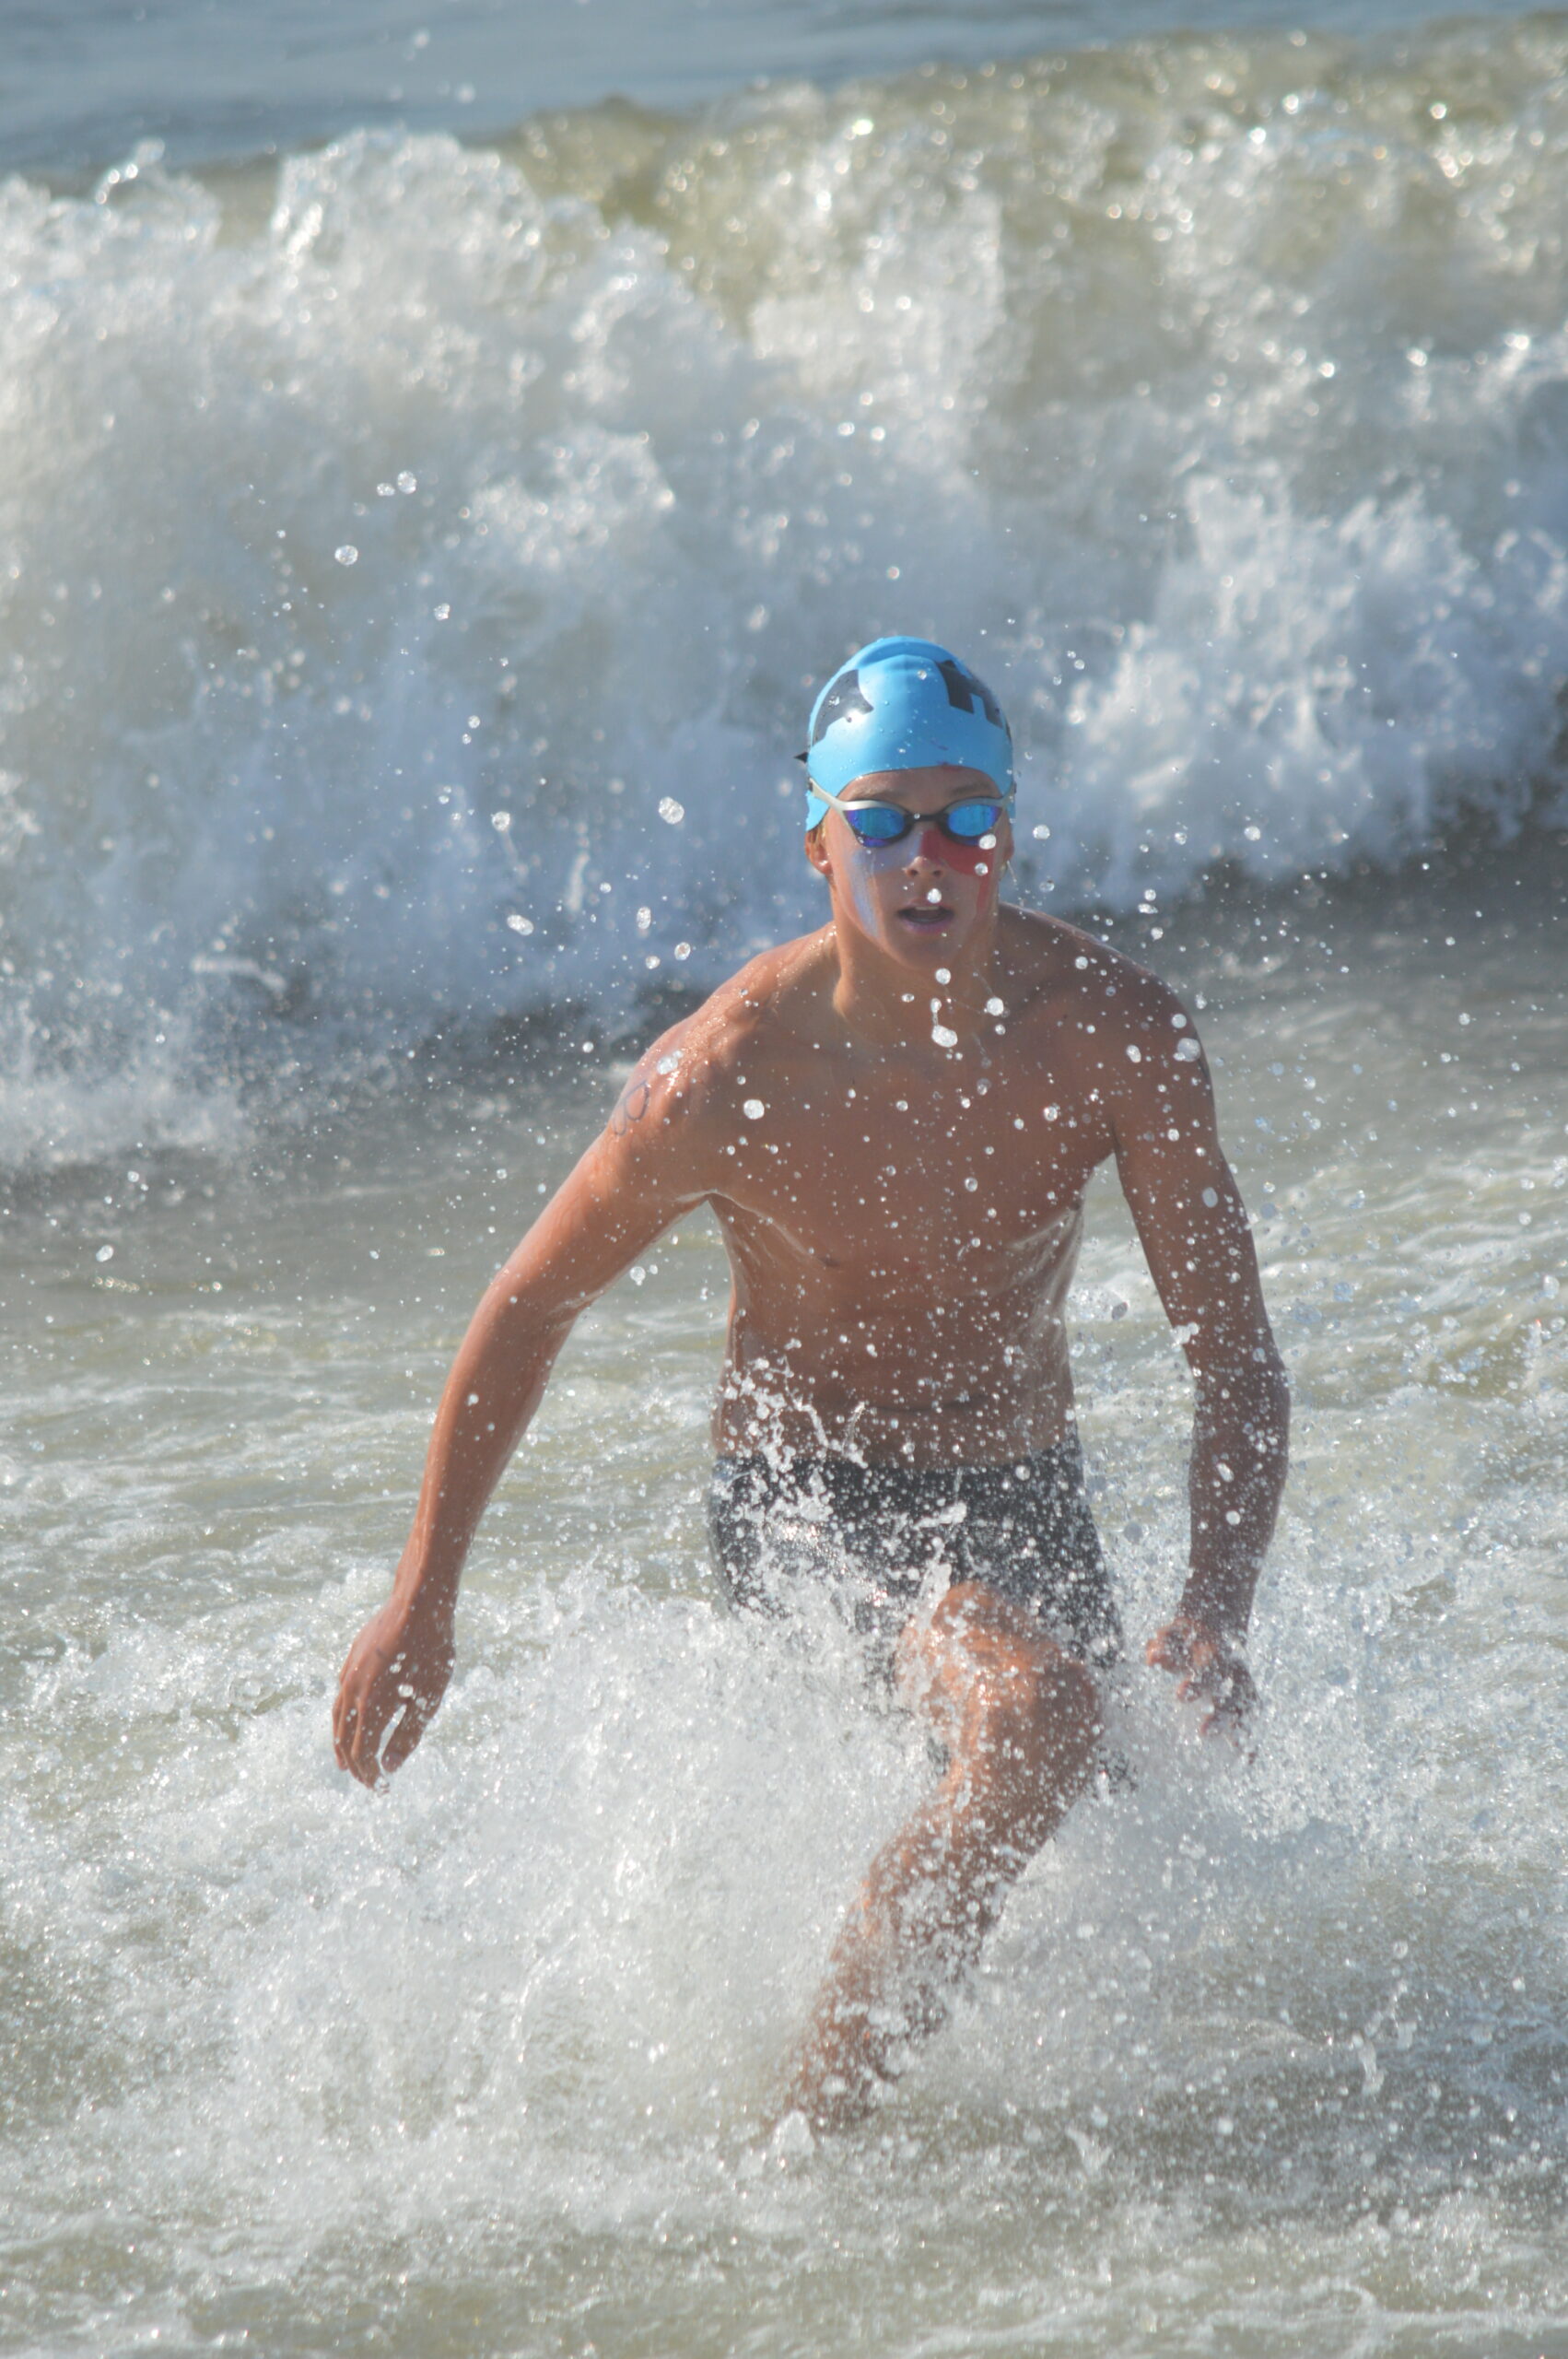 Miles Menu emerges from the distance swim on Saturday. GAVIN MENU